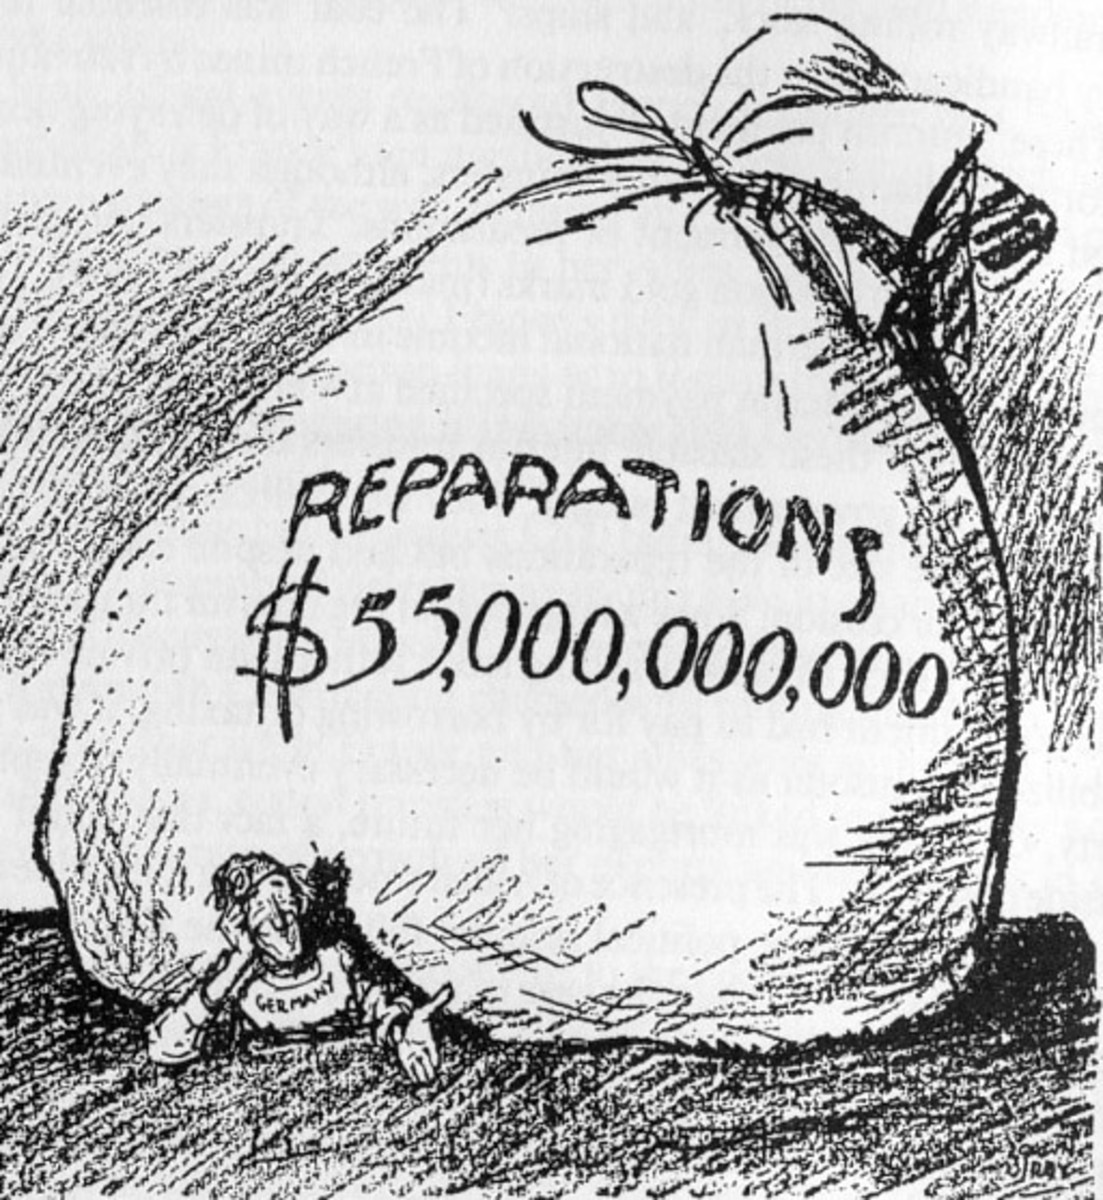 antiyoy reparations